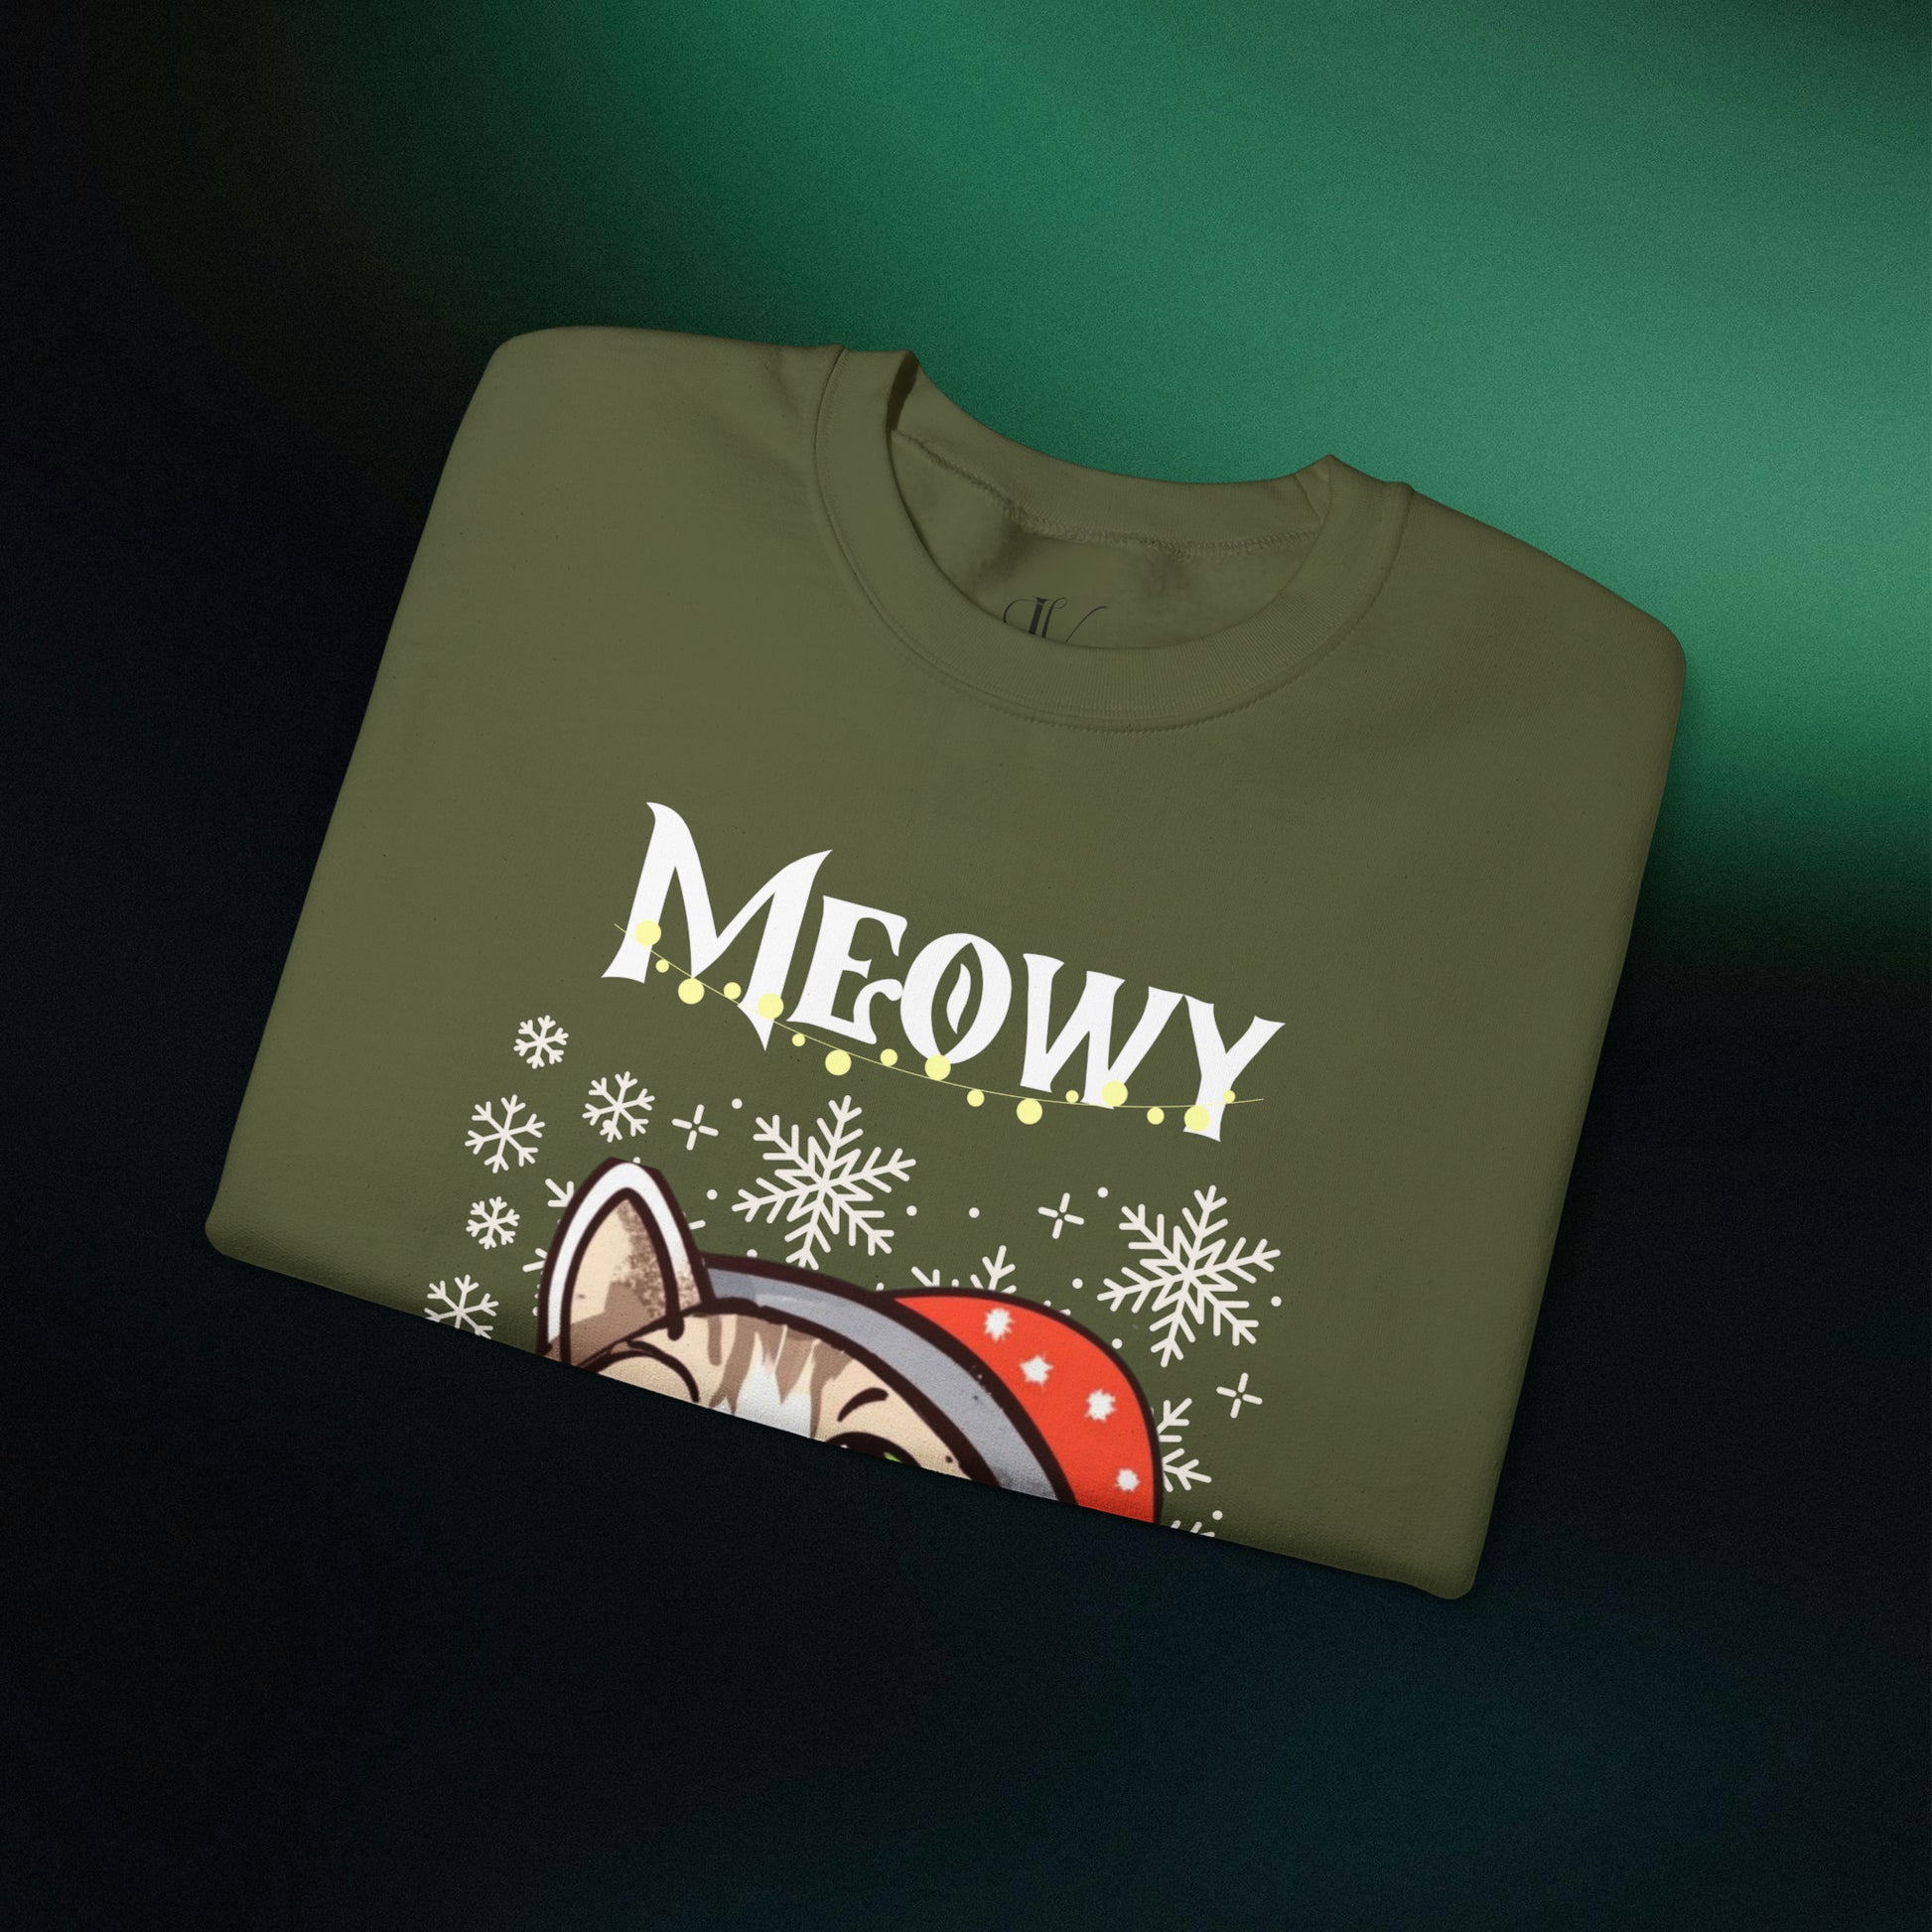 Feline Festivities Unleashed: Cute Christmas Cat Sweatshirt, Meowy Christmas Cat Sweater, Gifts for Cat Lovers | Christmas Lights Shirt, Christmas Cats Shirt - MEOWY CATMAS Sweatshirt   